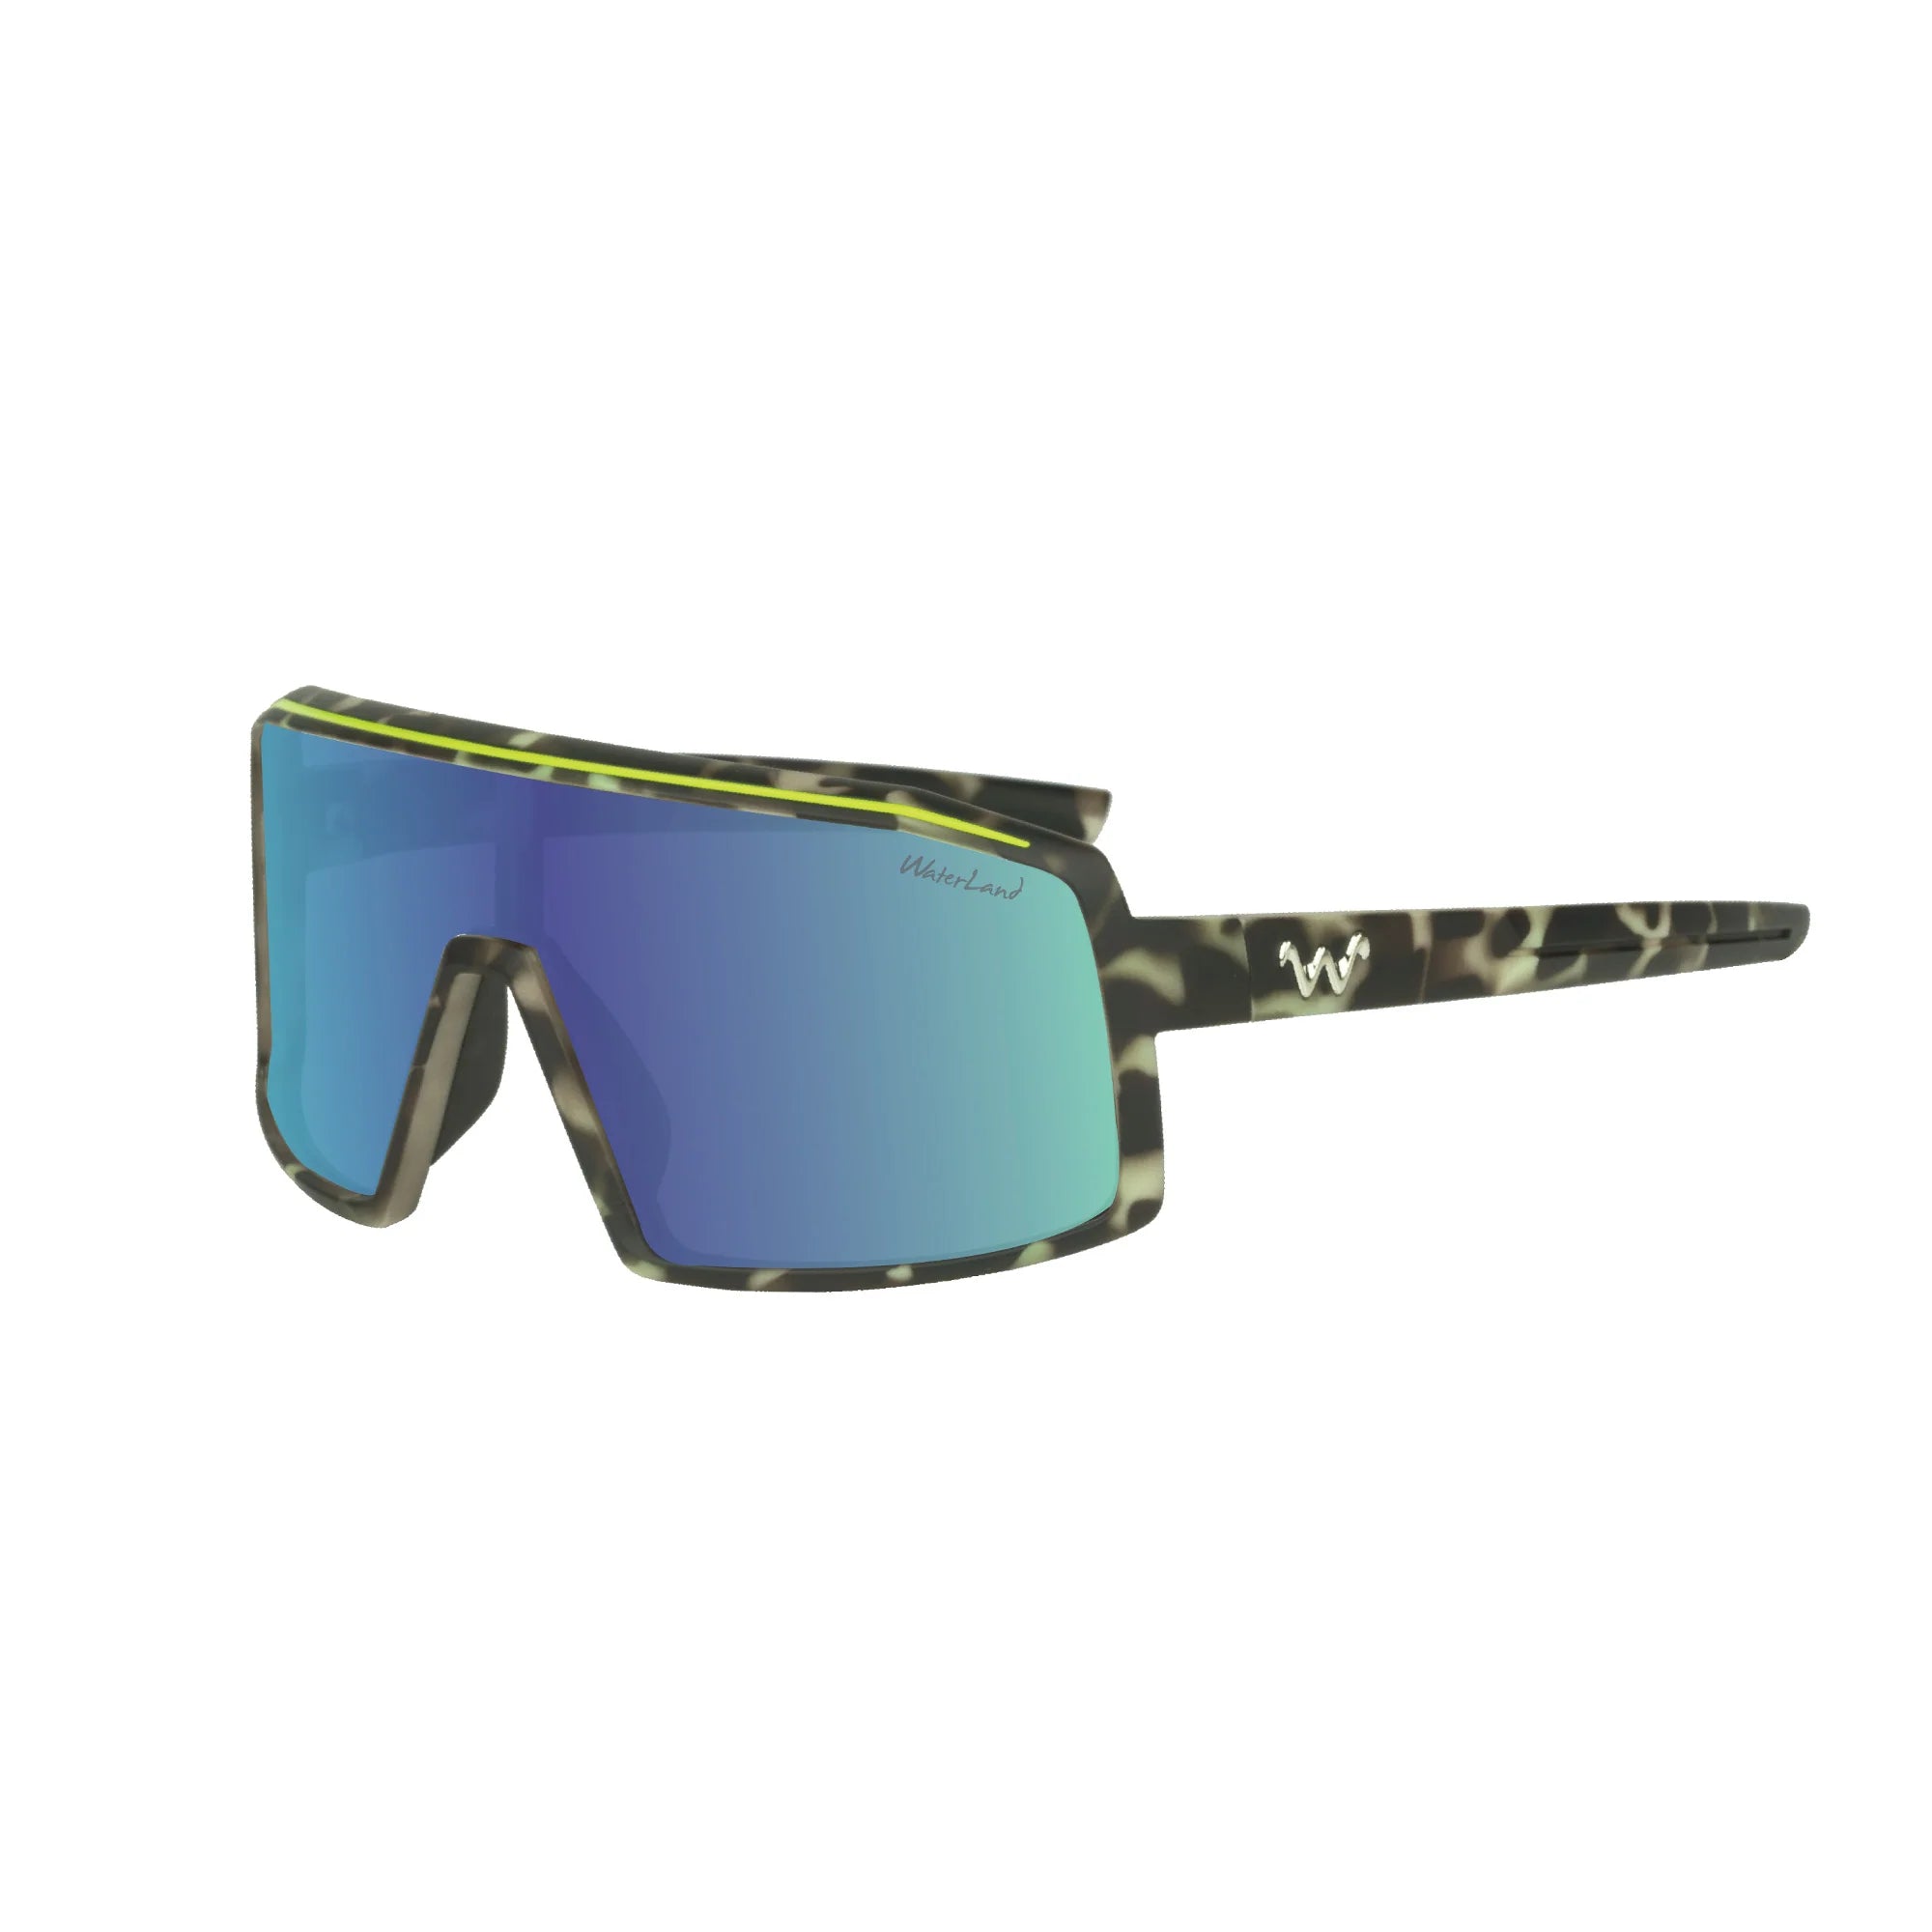 Waterland Polarized Sunglasses - Cooker Series Blue / Non-Polarized / Waterwood